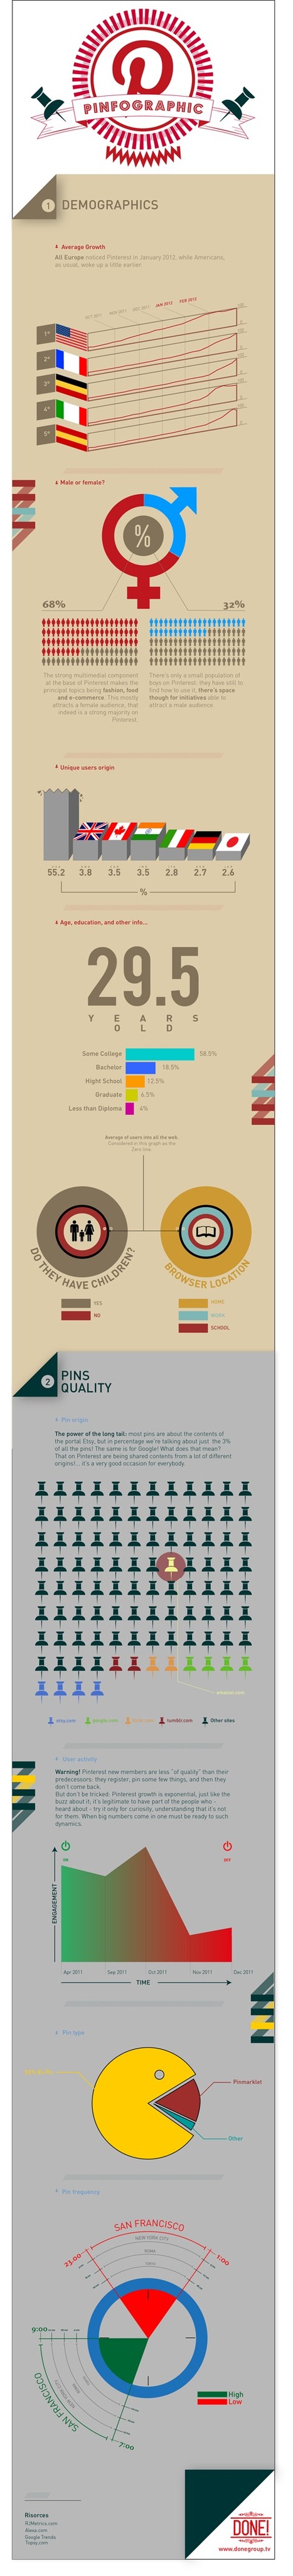 Infografica: Chi è che usa Pinterest? | guida pinterest | Scoop.it